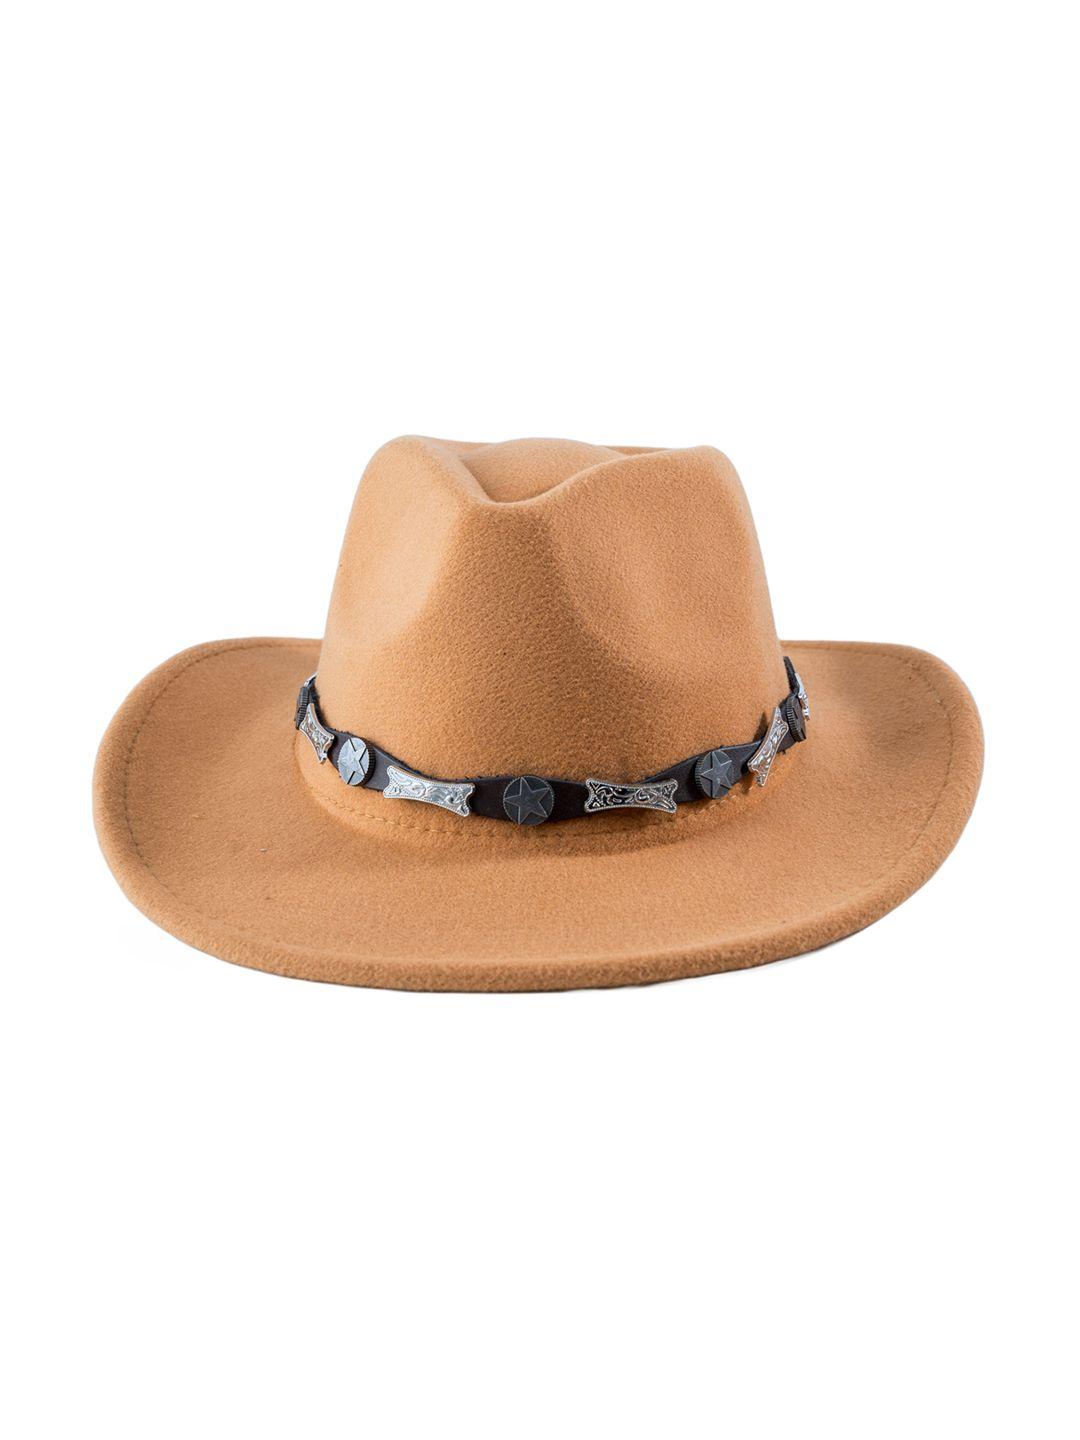 chokore men cowboy fedora hat with buckle belt